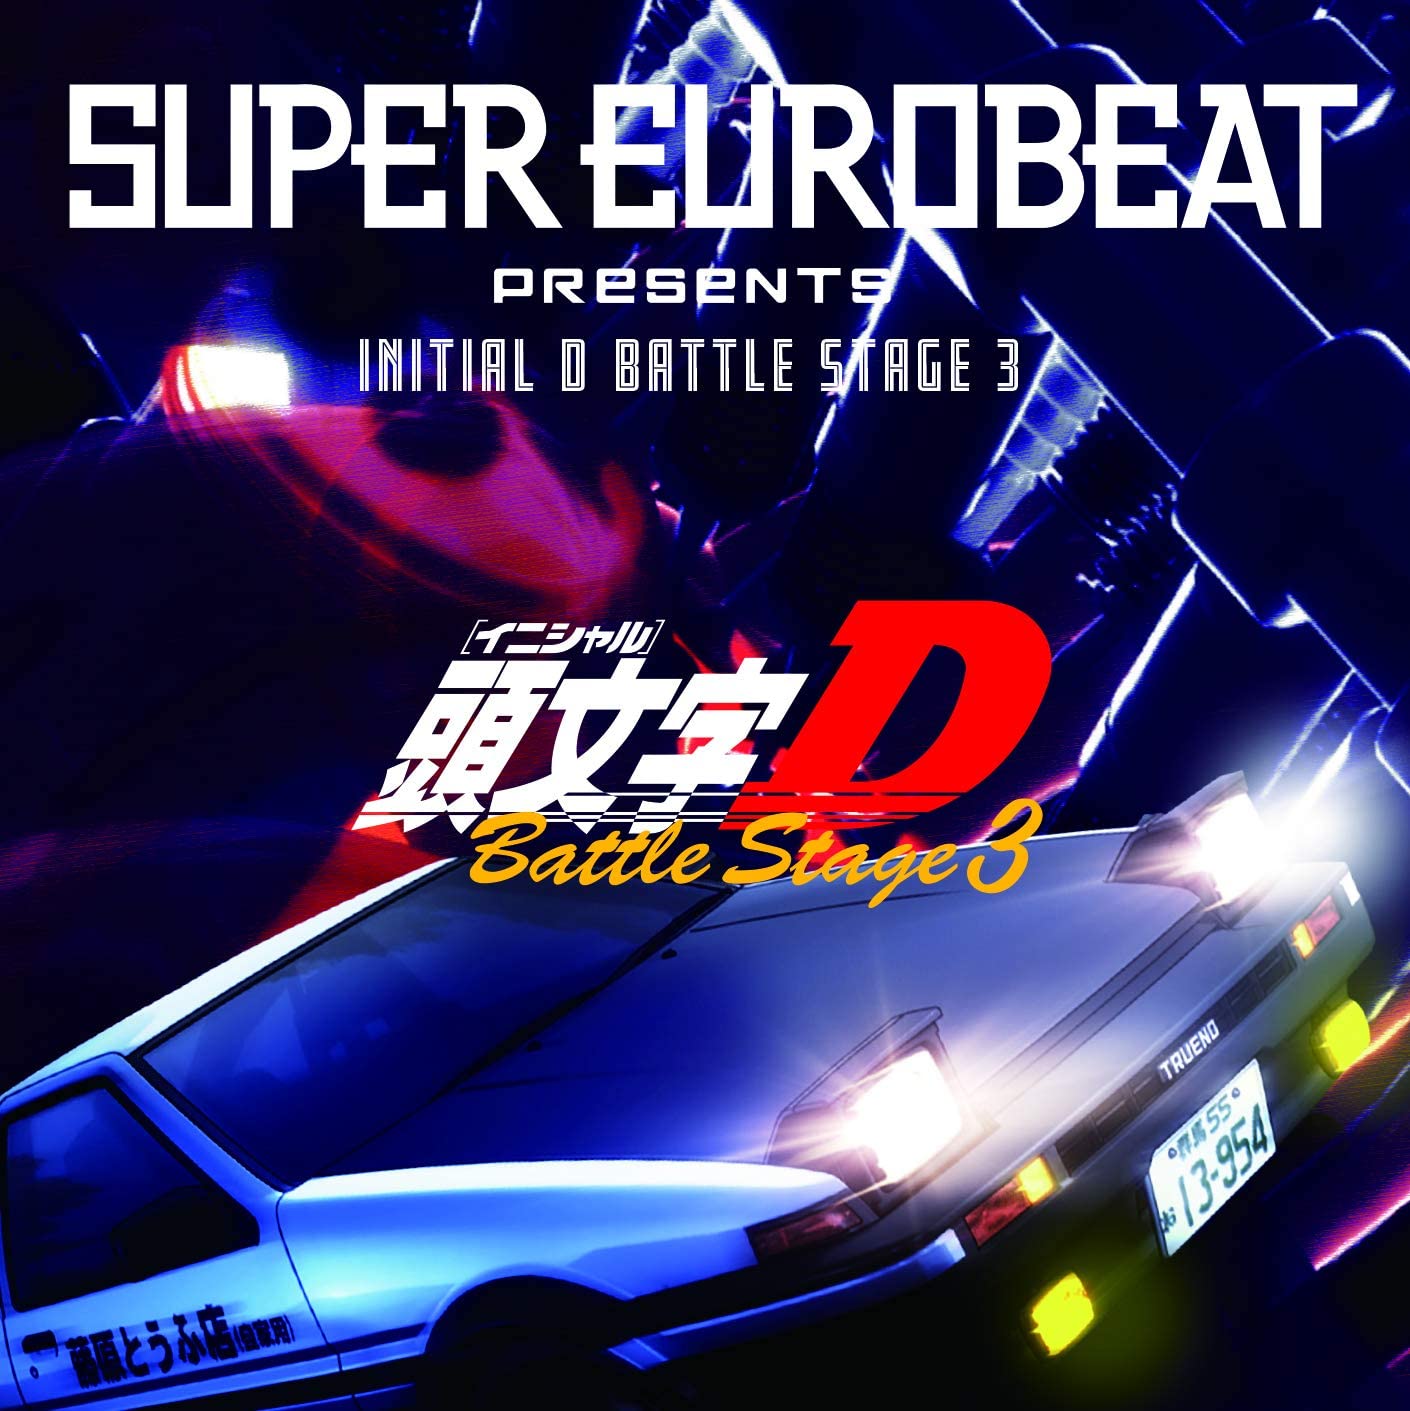 Super Eurobeat Presents Initial D Battle Stage 3 Download Mp3 3k Flac 24 48 Hi Res